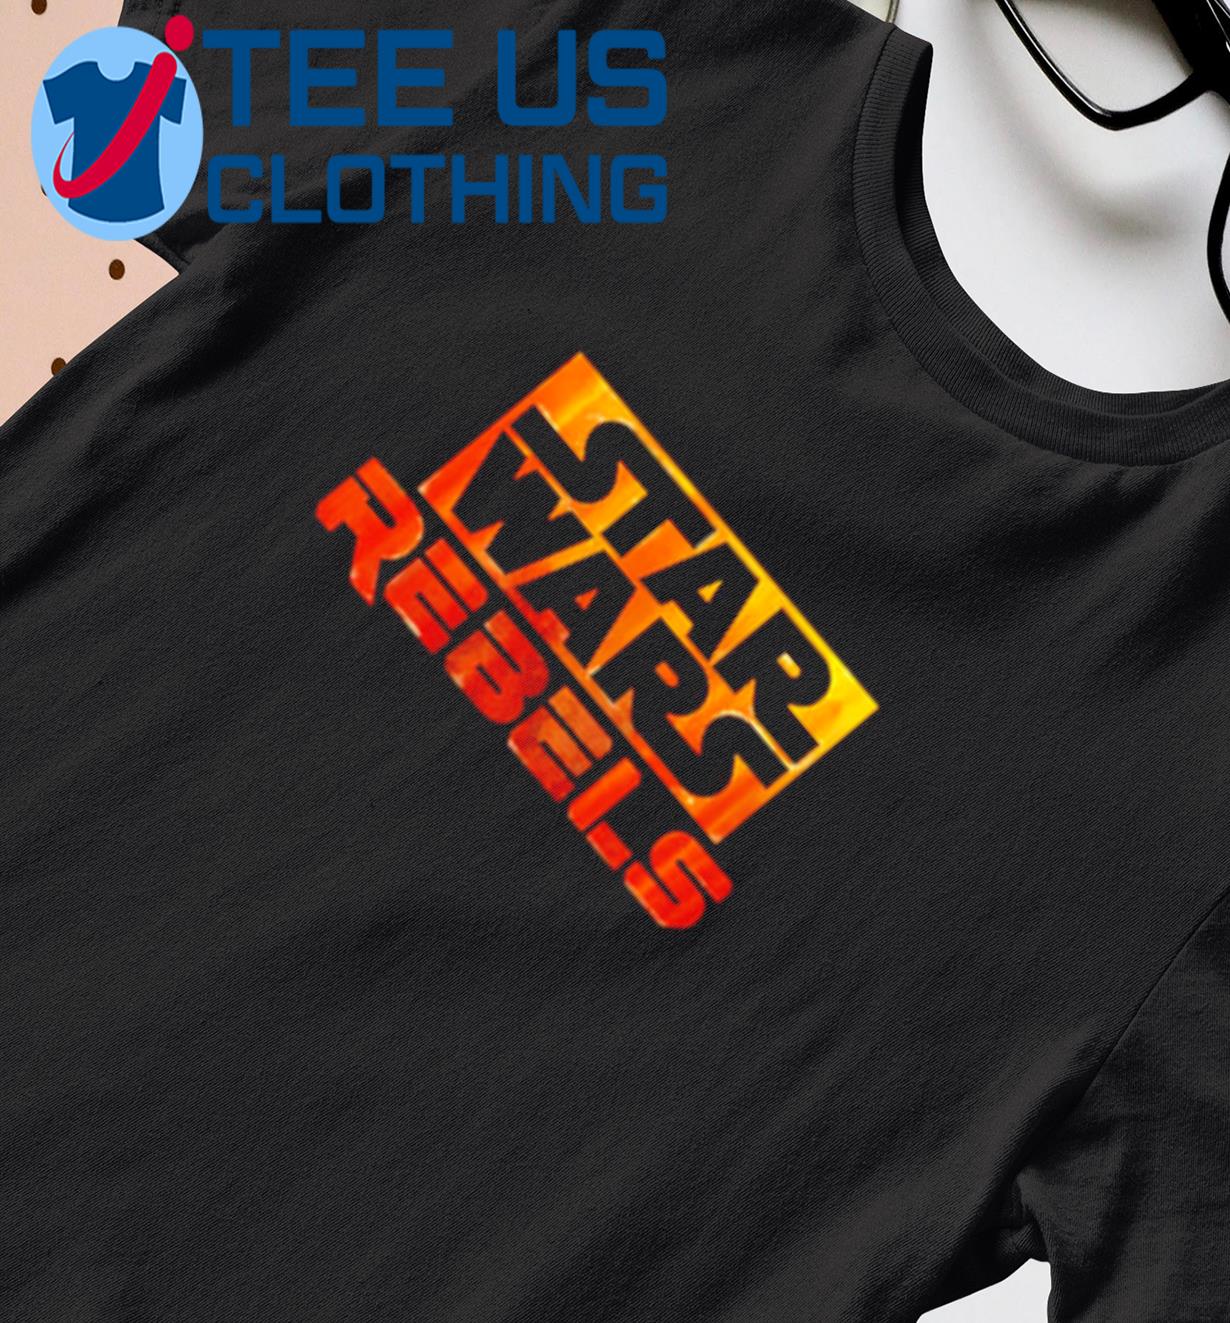 Dave Filoni Star wars rebels shirt